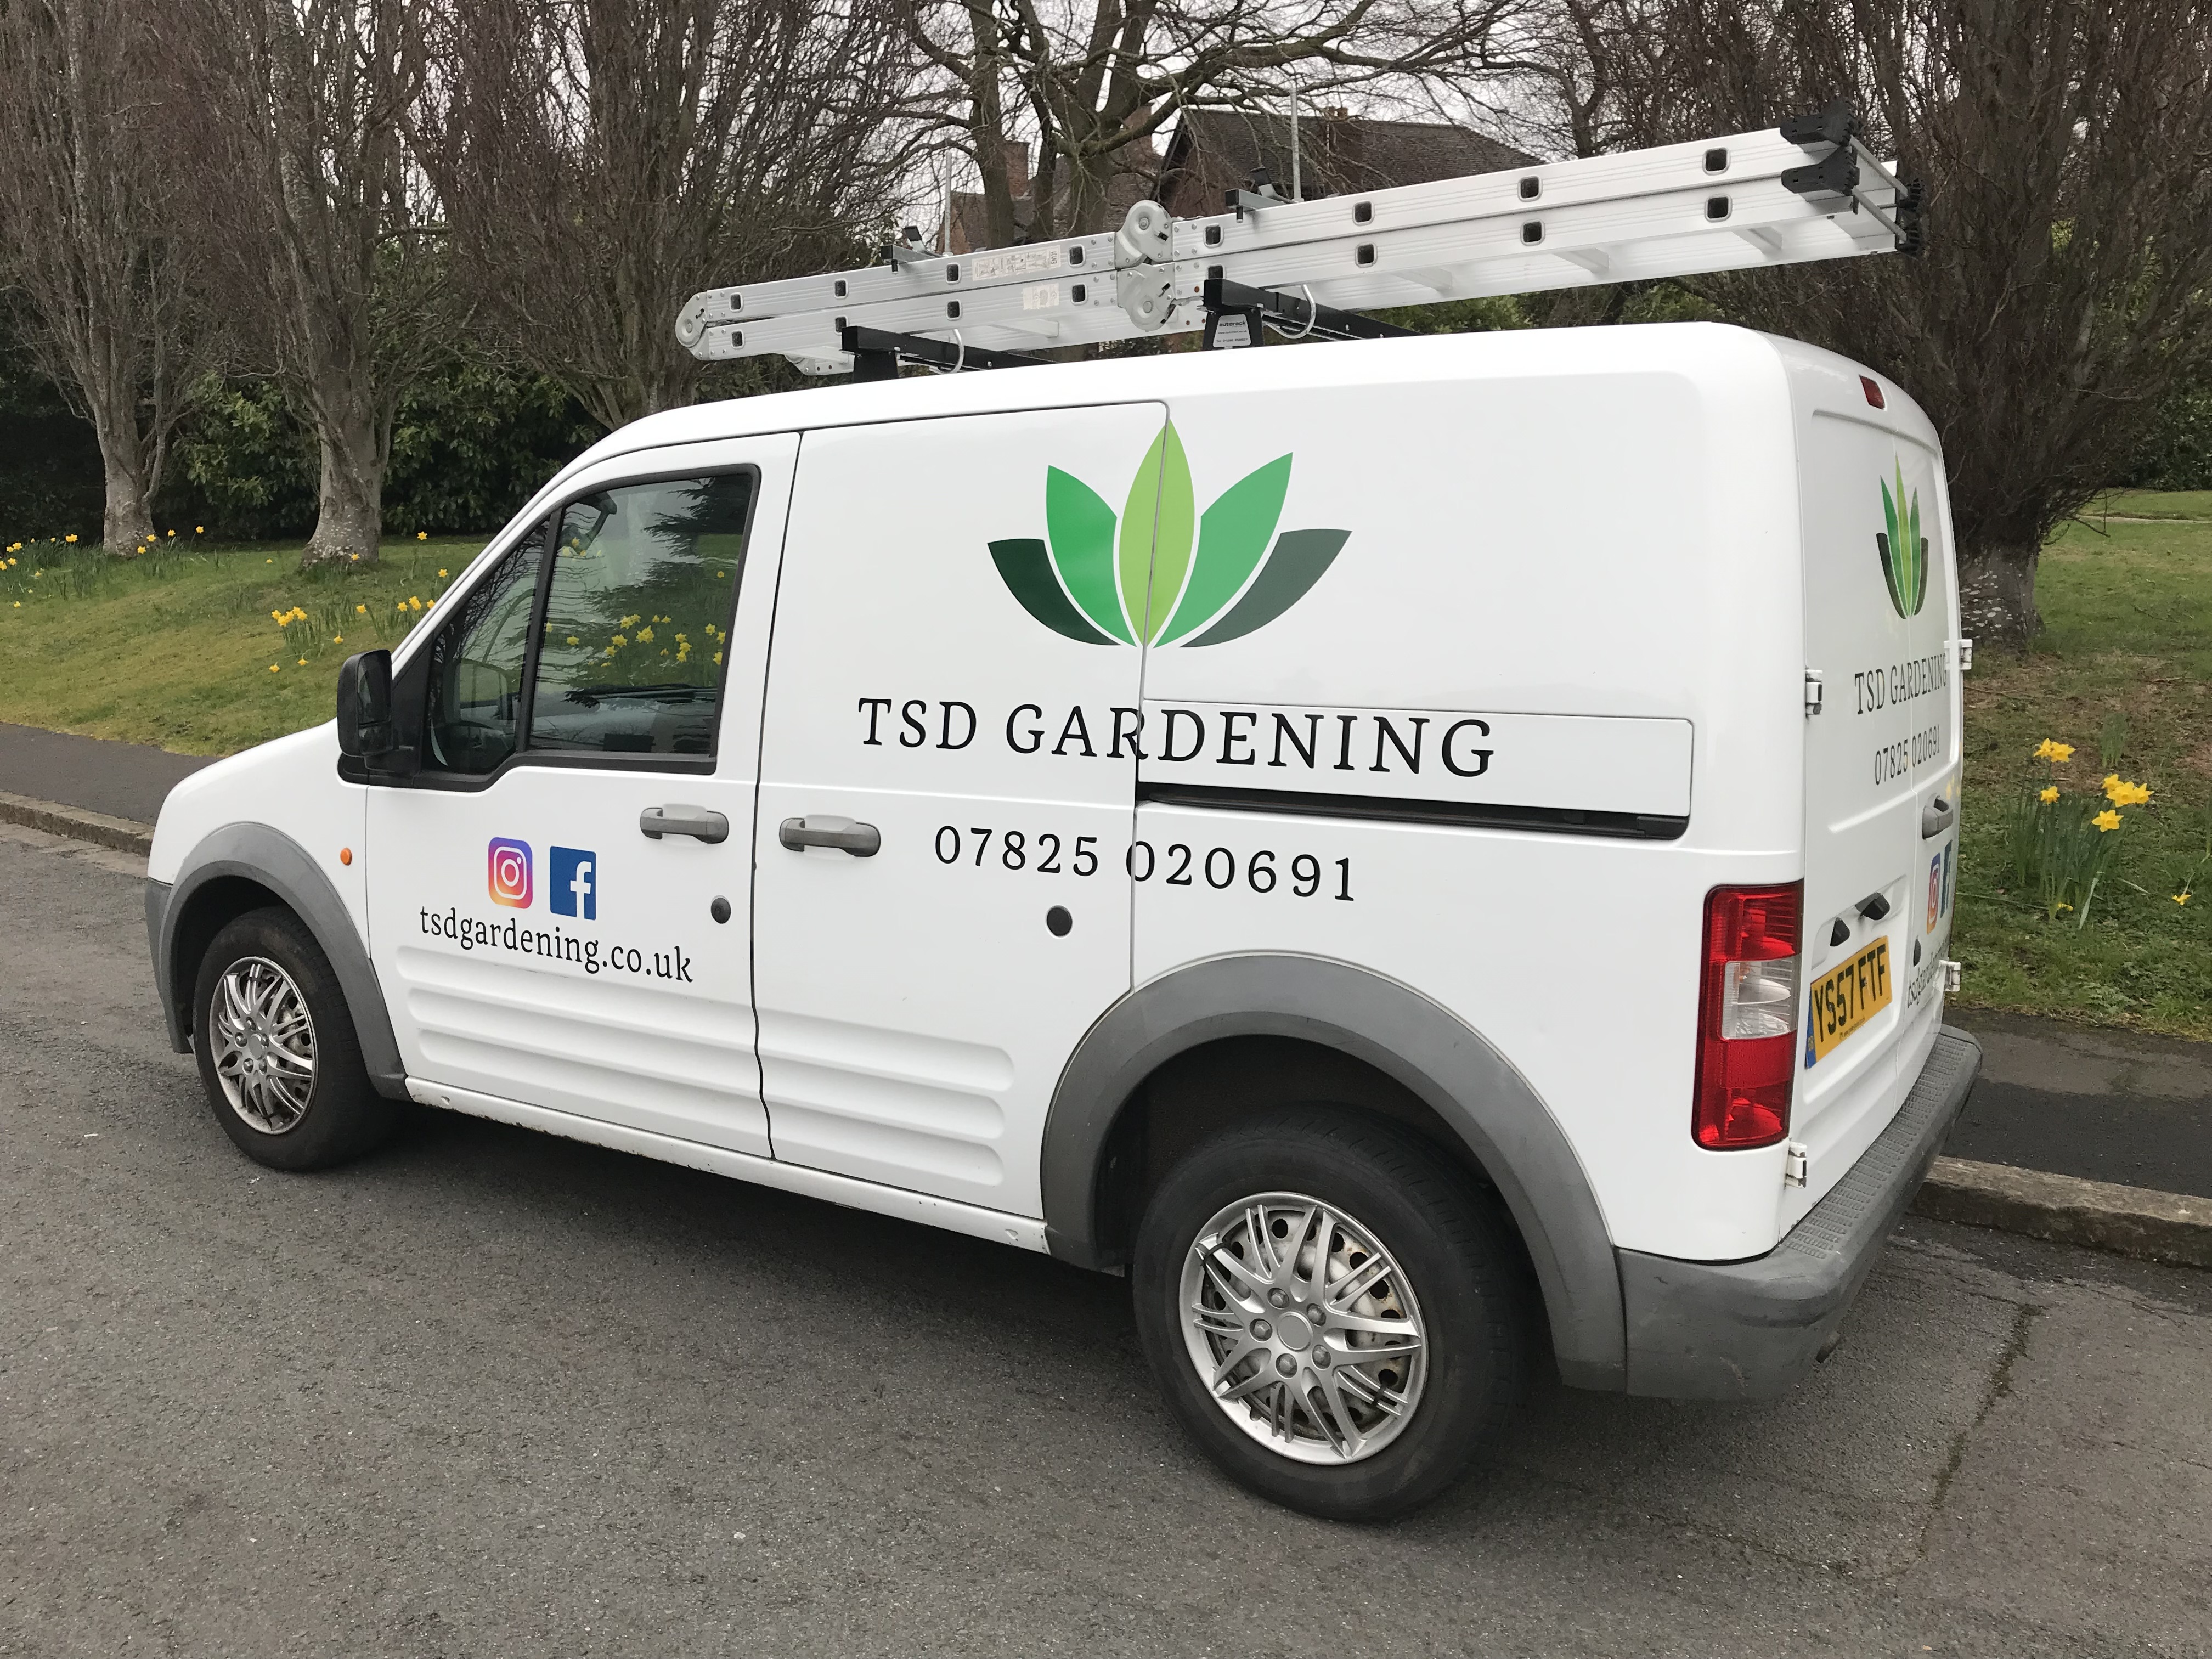 TSD Gardening - Our van